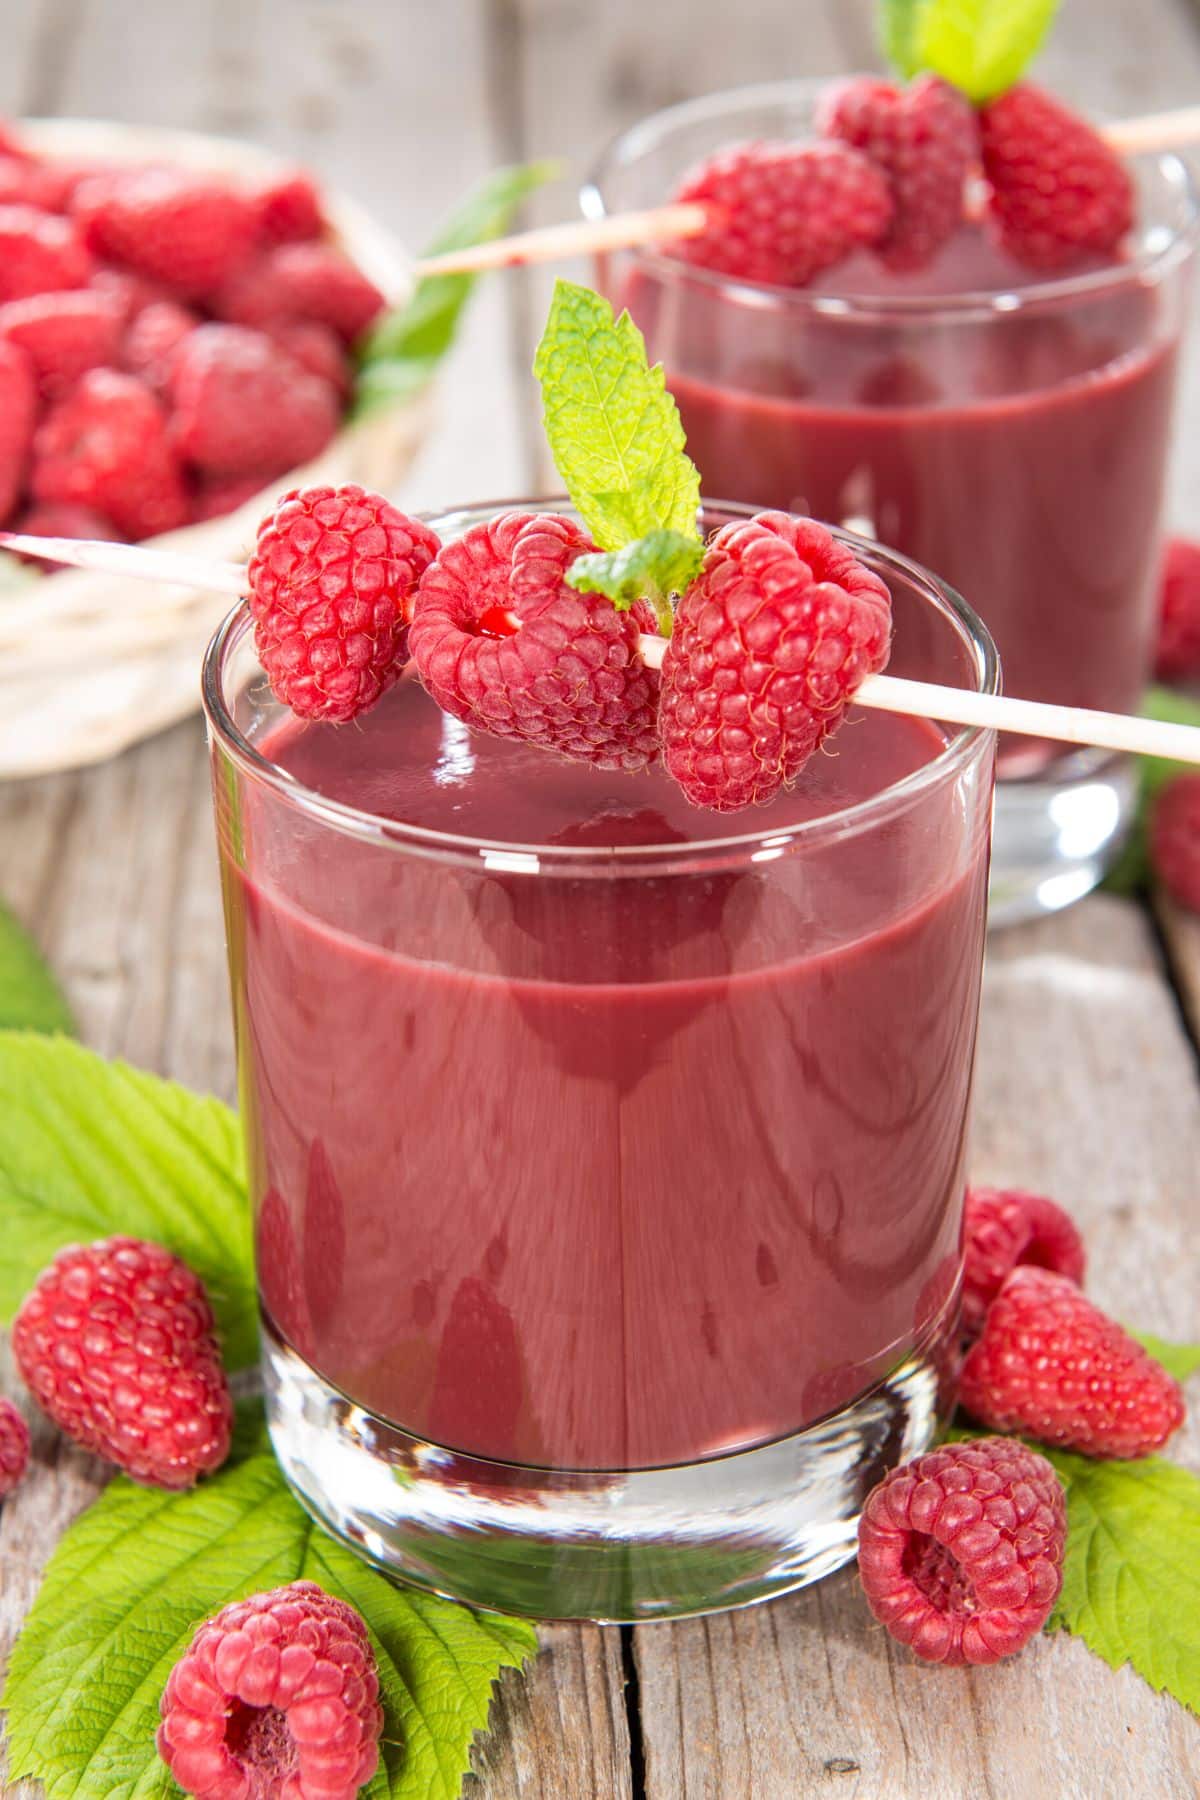 A skewer of raspberries across a glass of fresh raspberry juice.